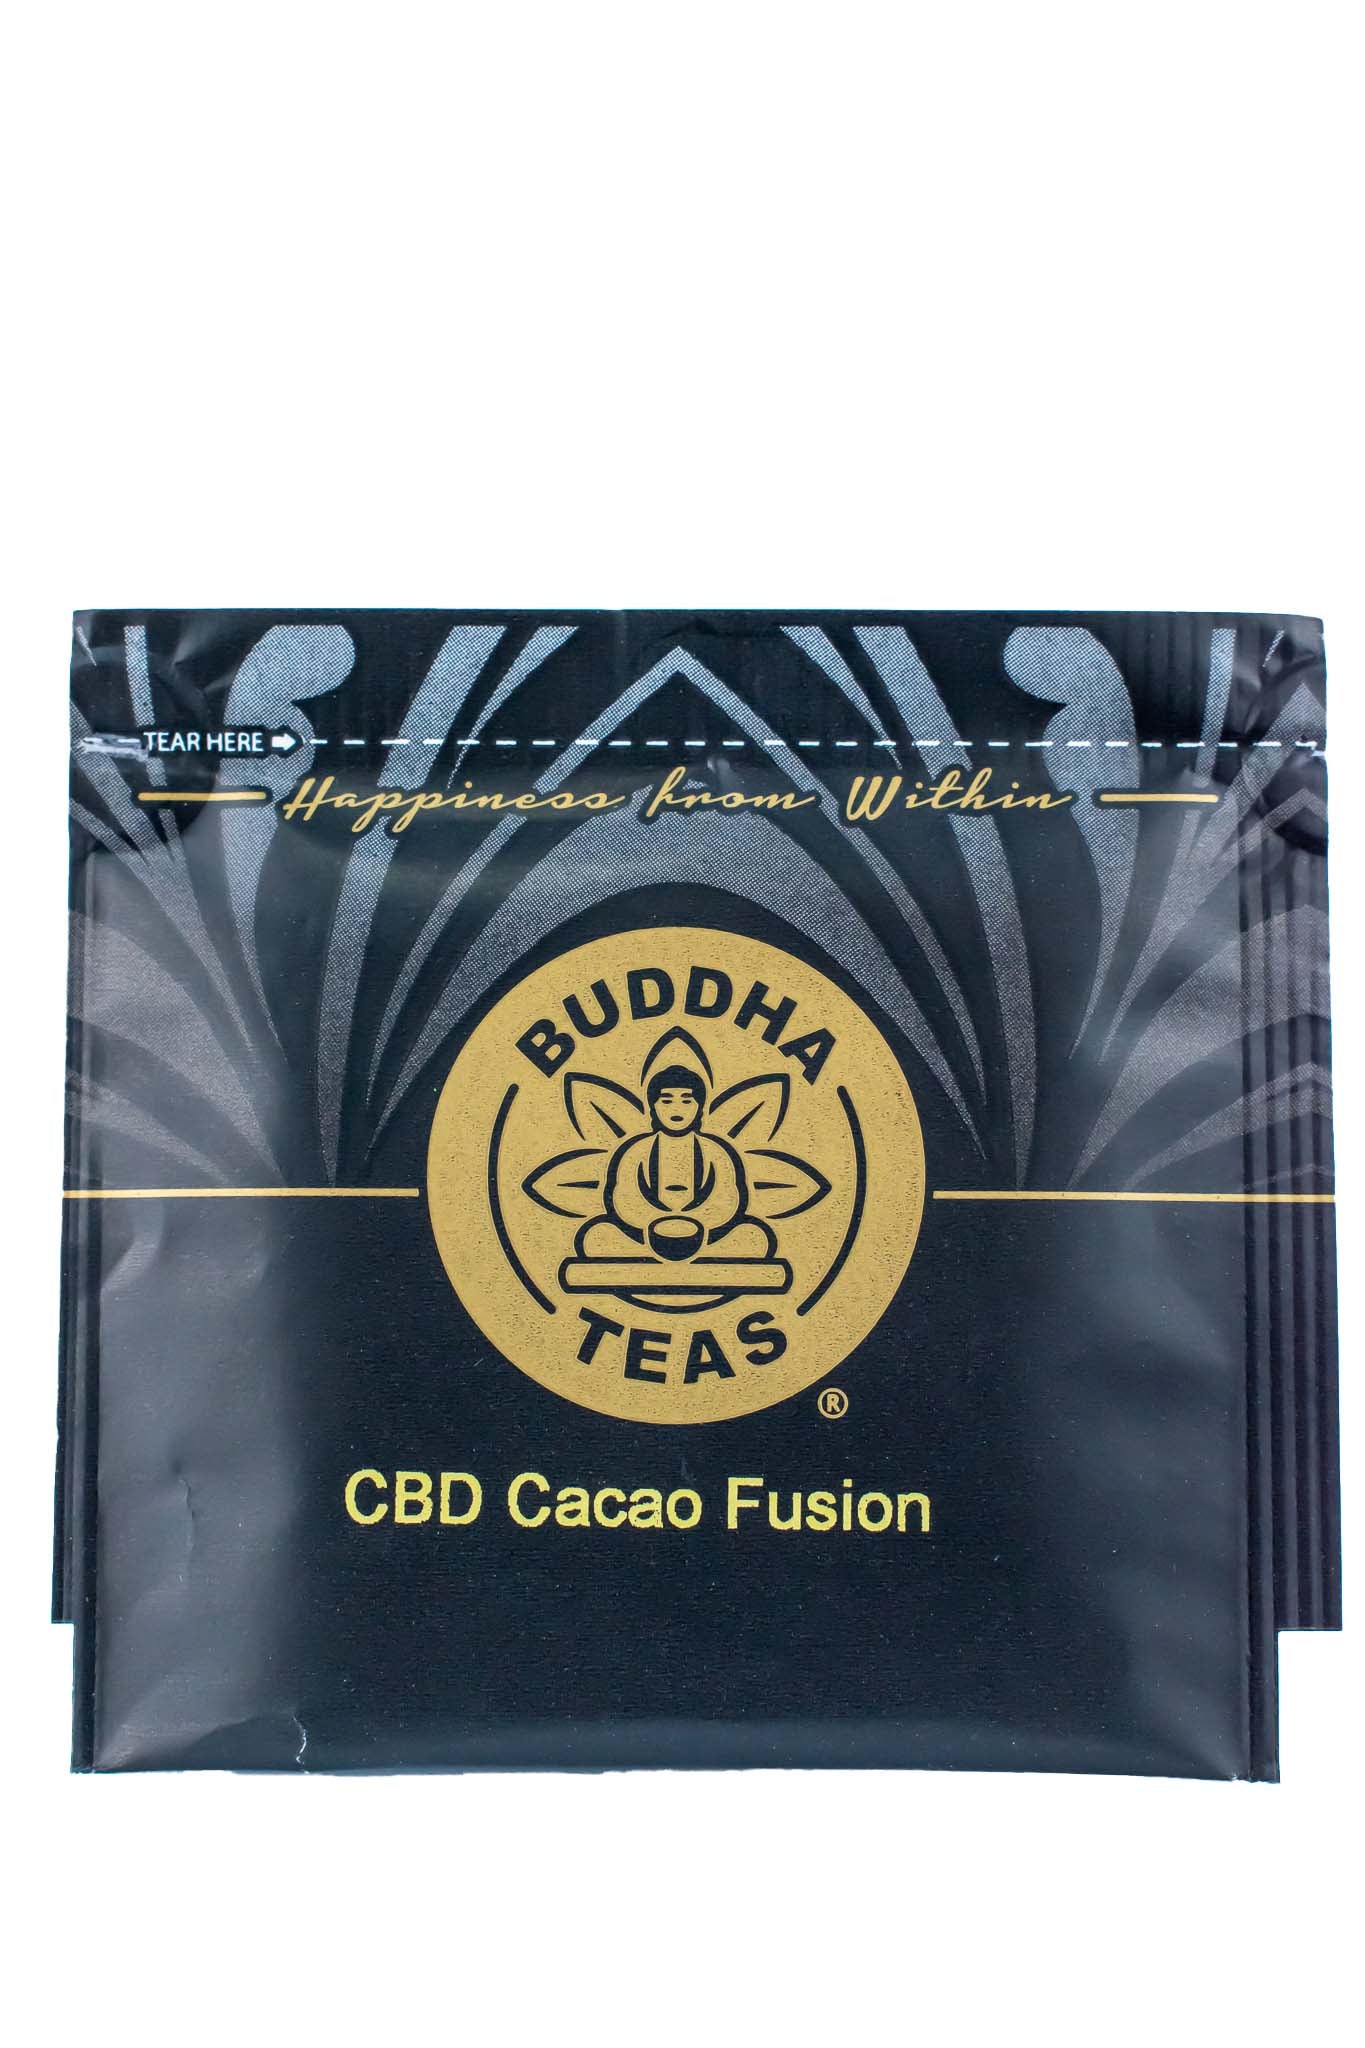 CBD Cacao Fusion Tea